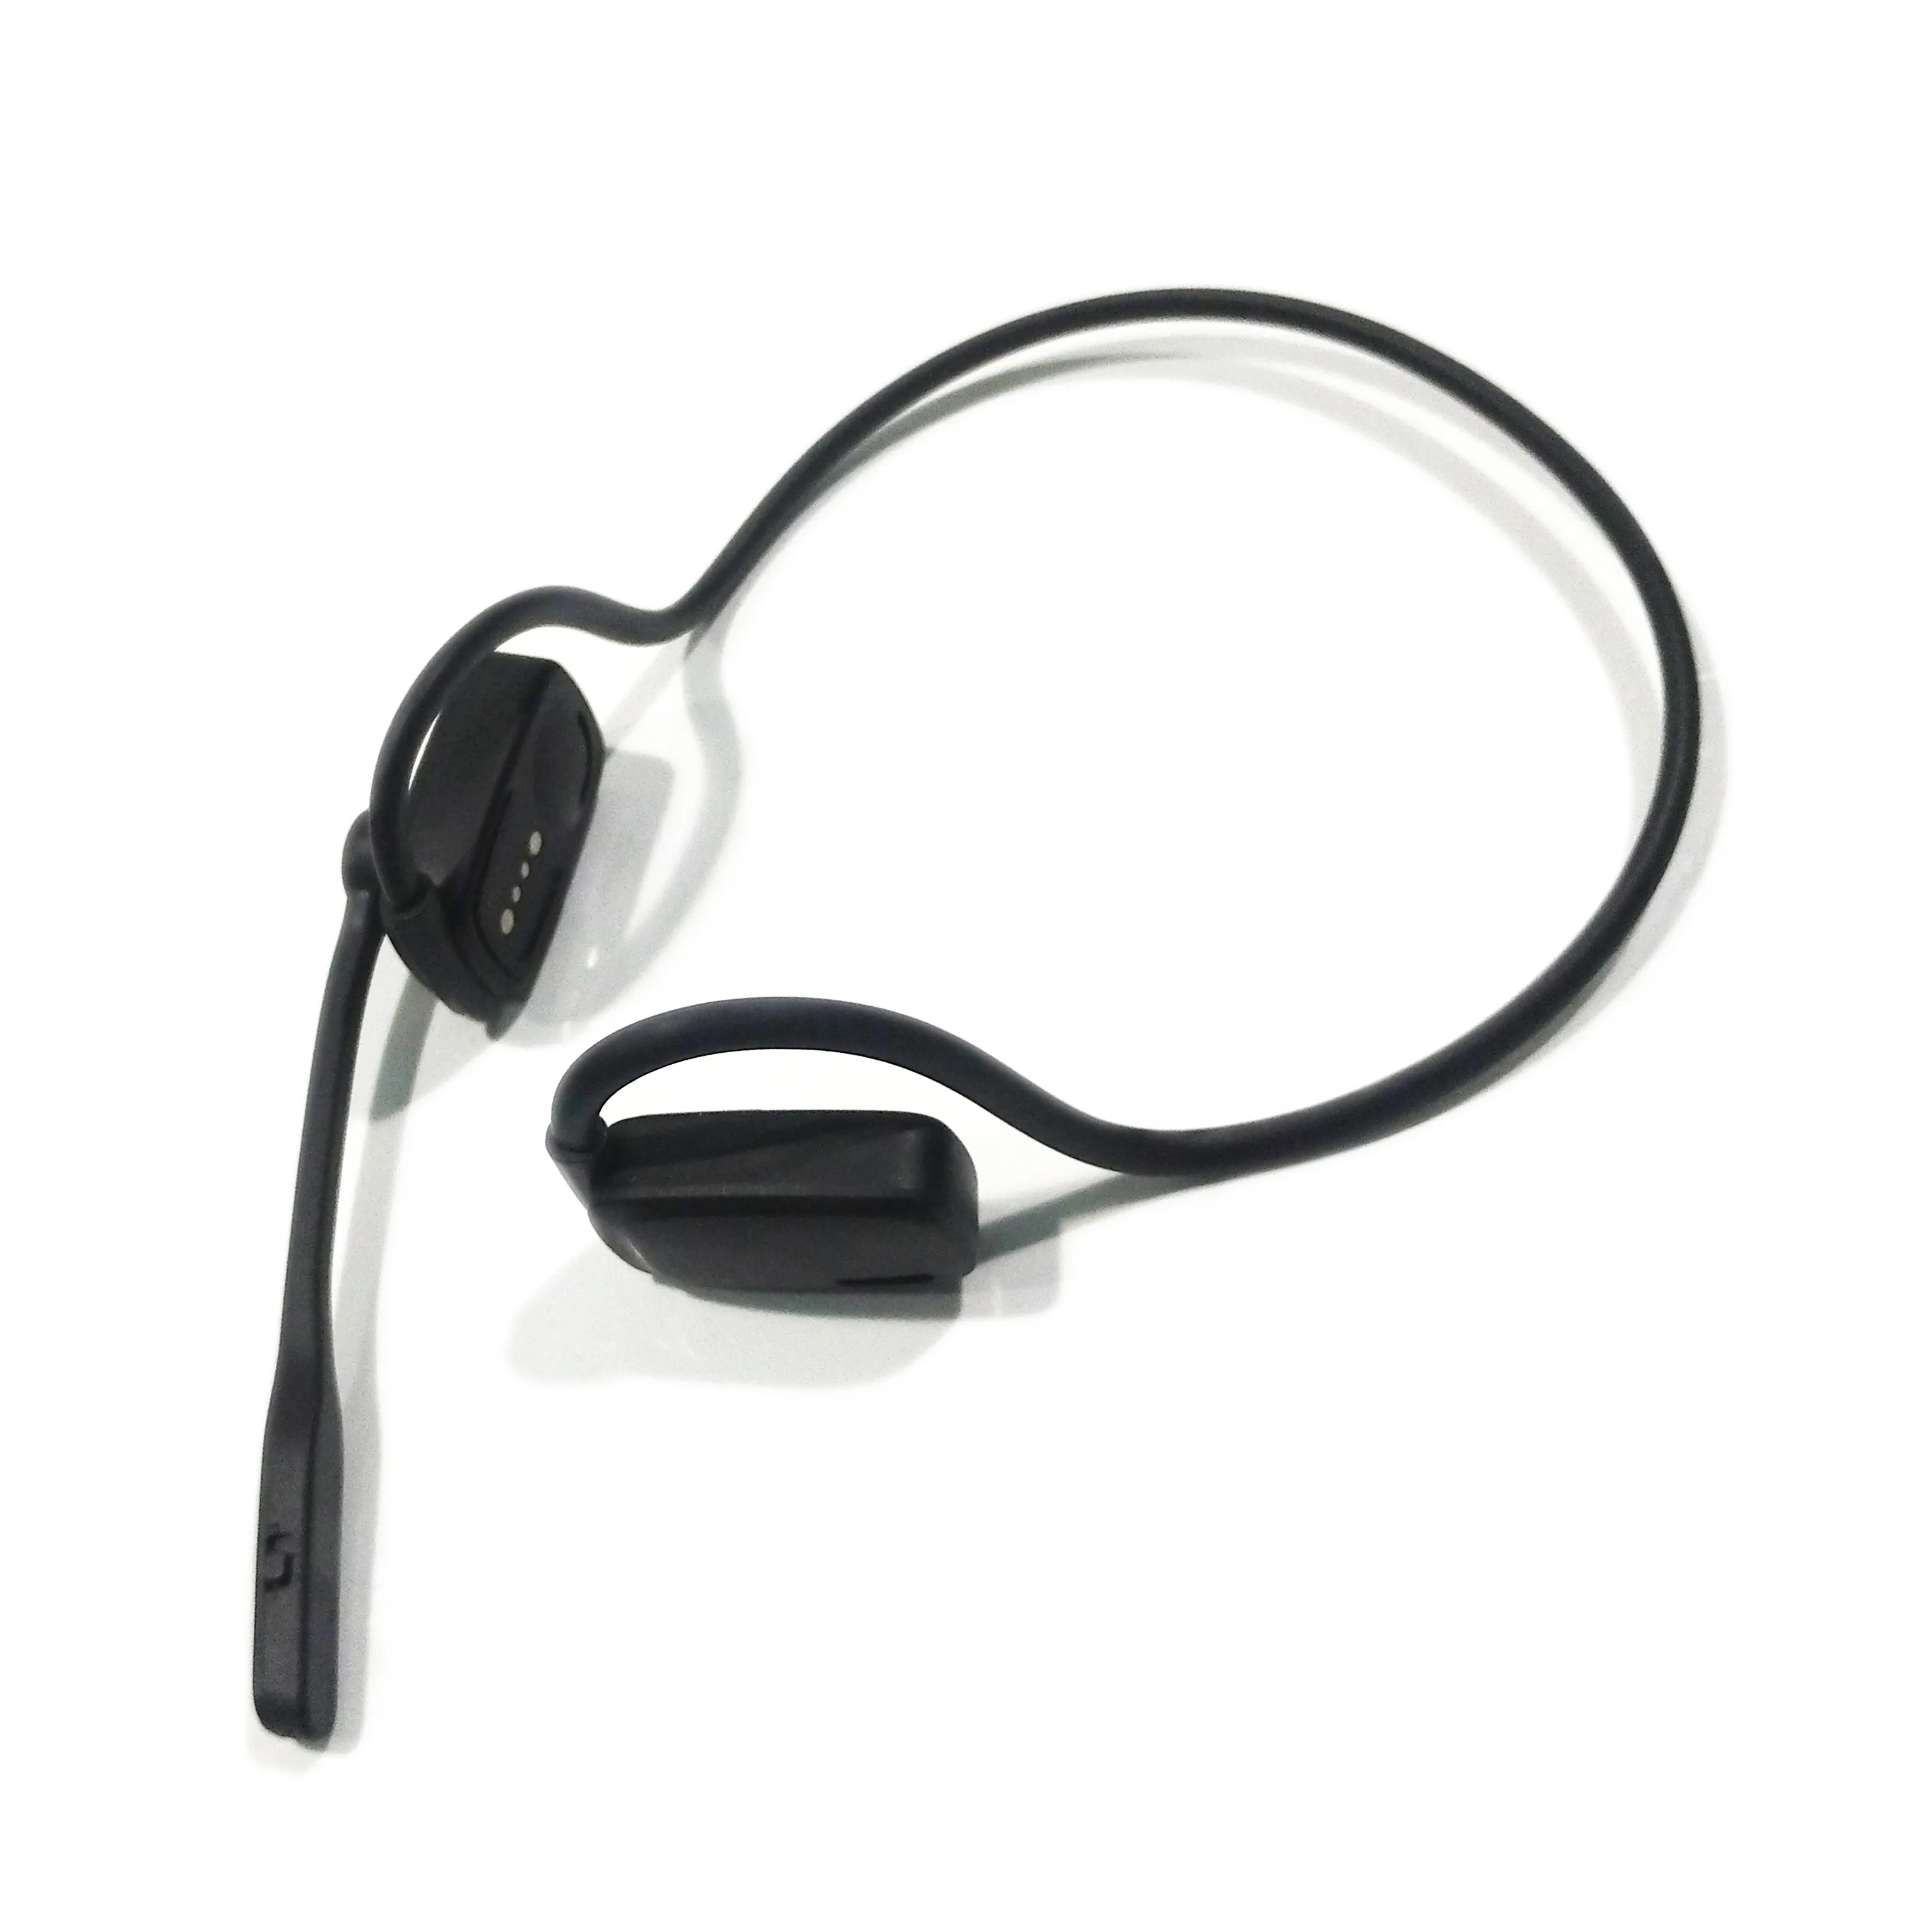 LK12 earphone Bluetooth nirkabel 2 perangkat, earphone olahraga nirkabel dapat terhubung